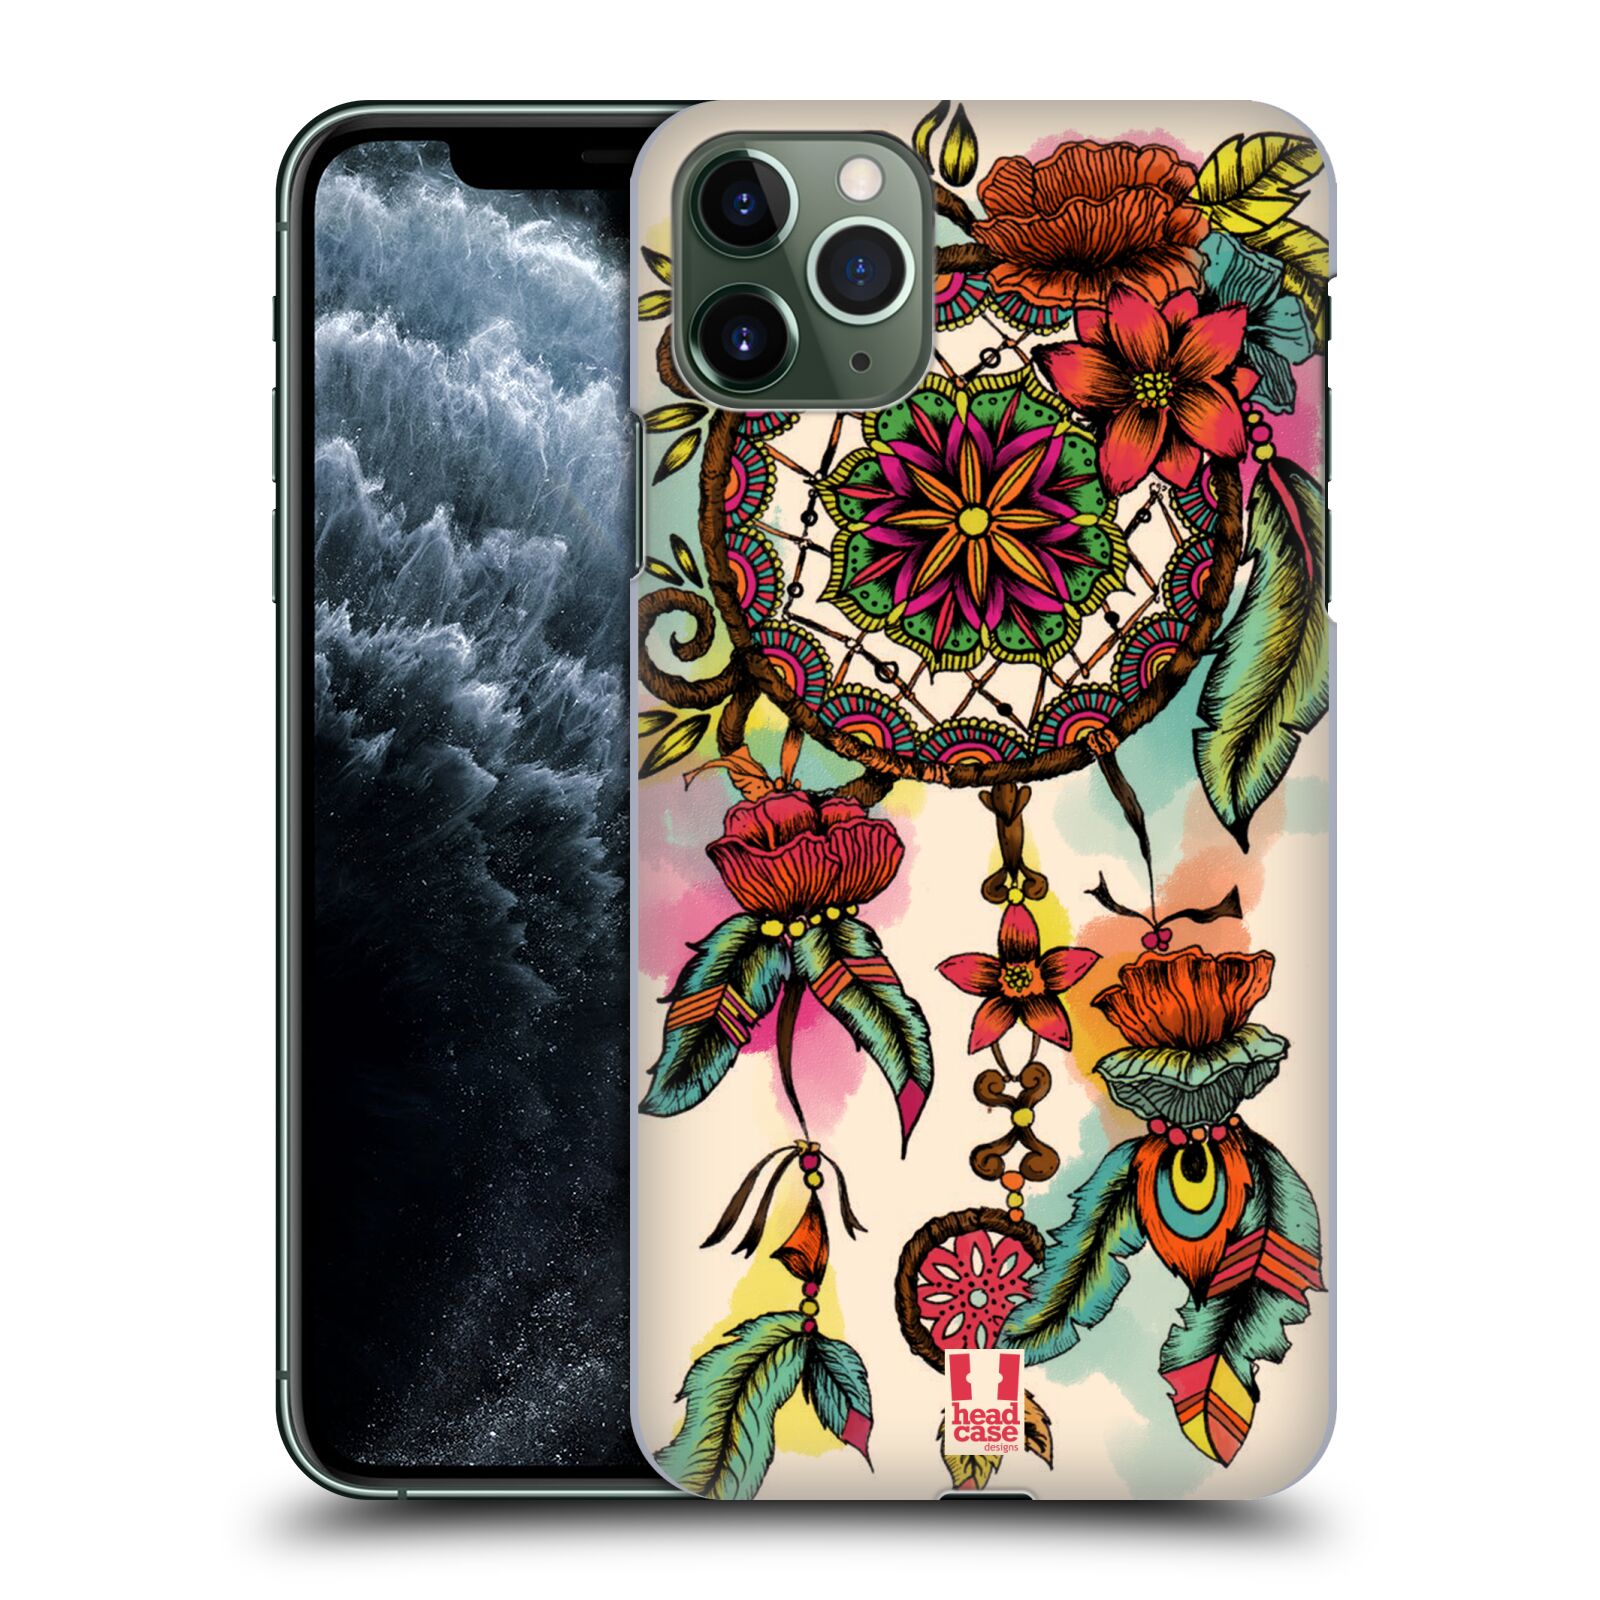 Pouzdro na mobil Apple Iphone 11 PRO MAX - HEAD CASE - vzor Květy lapač snů FLORID